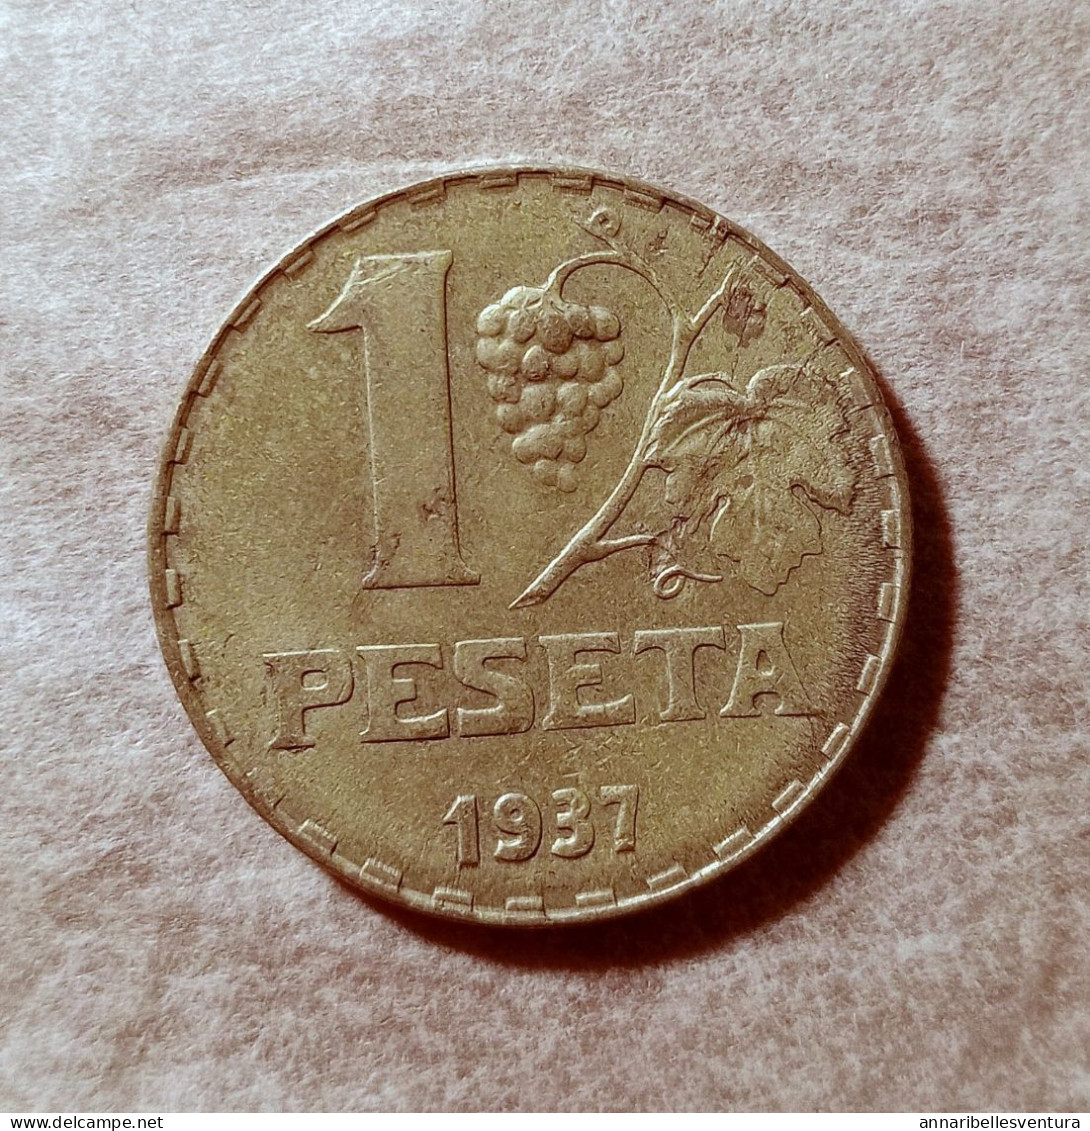 1 PESETA, ALFONSO XIII 1937. - Republican Location